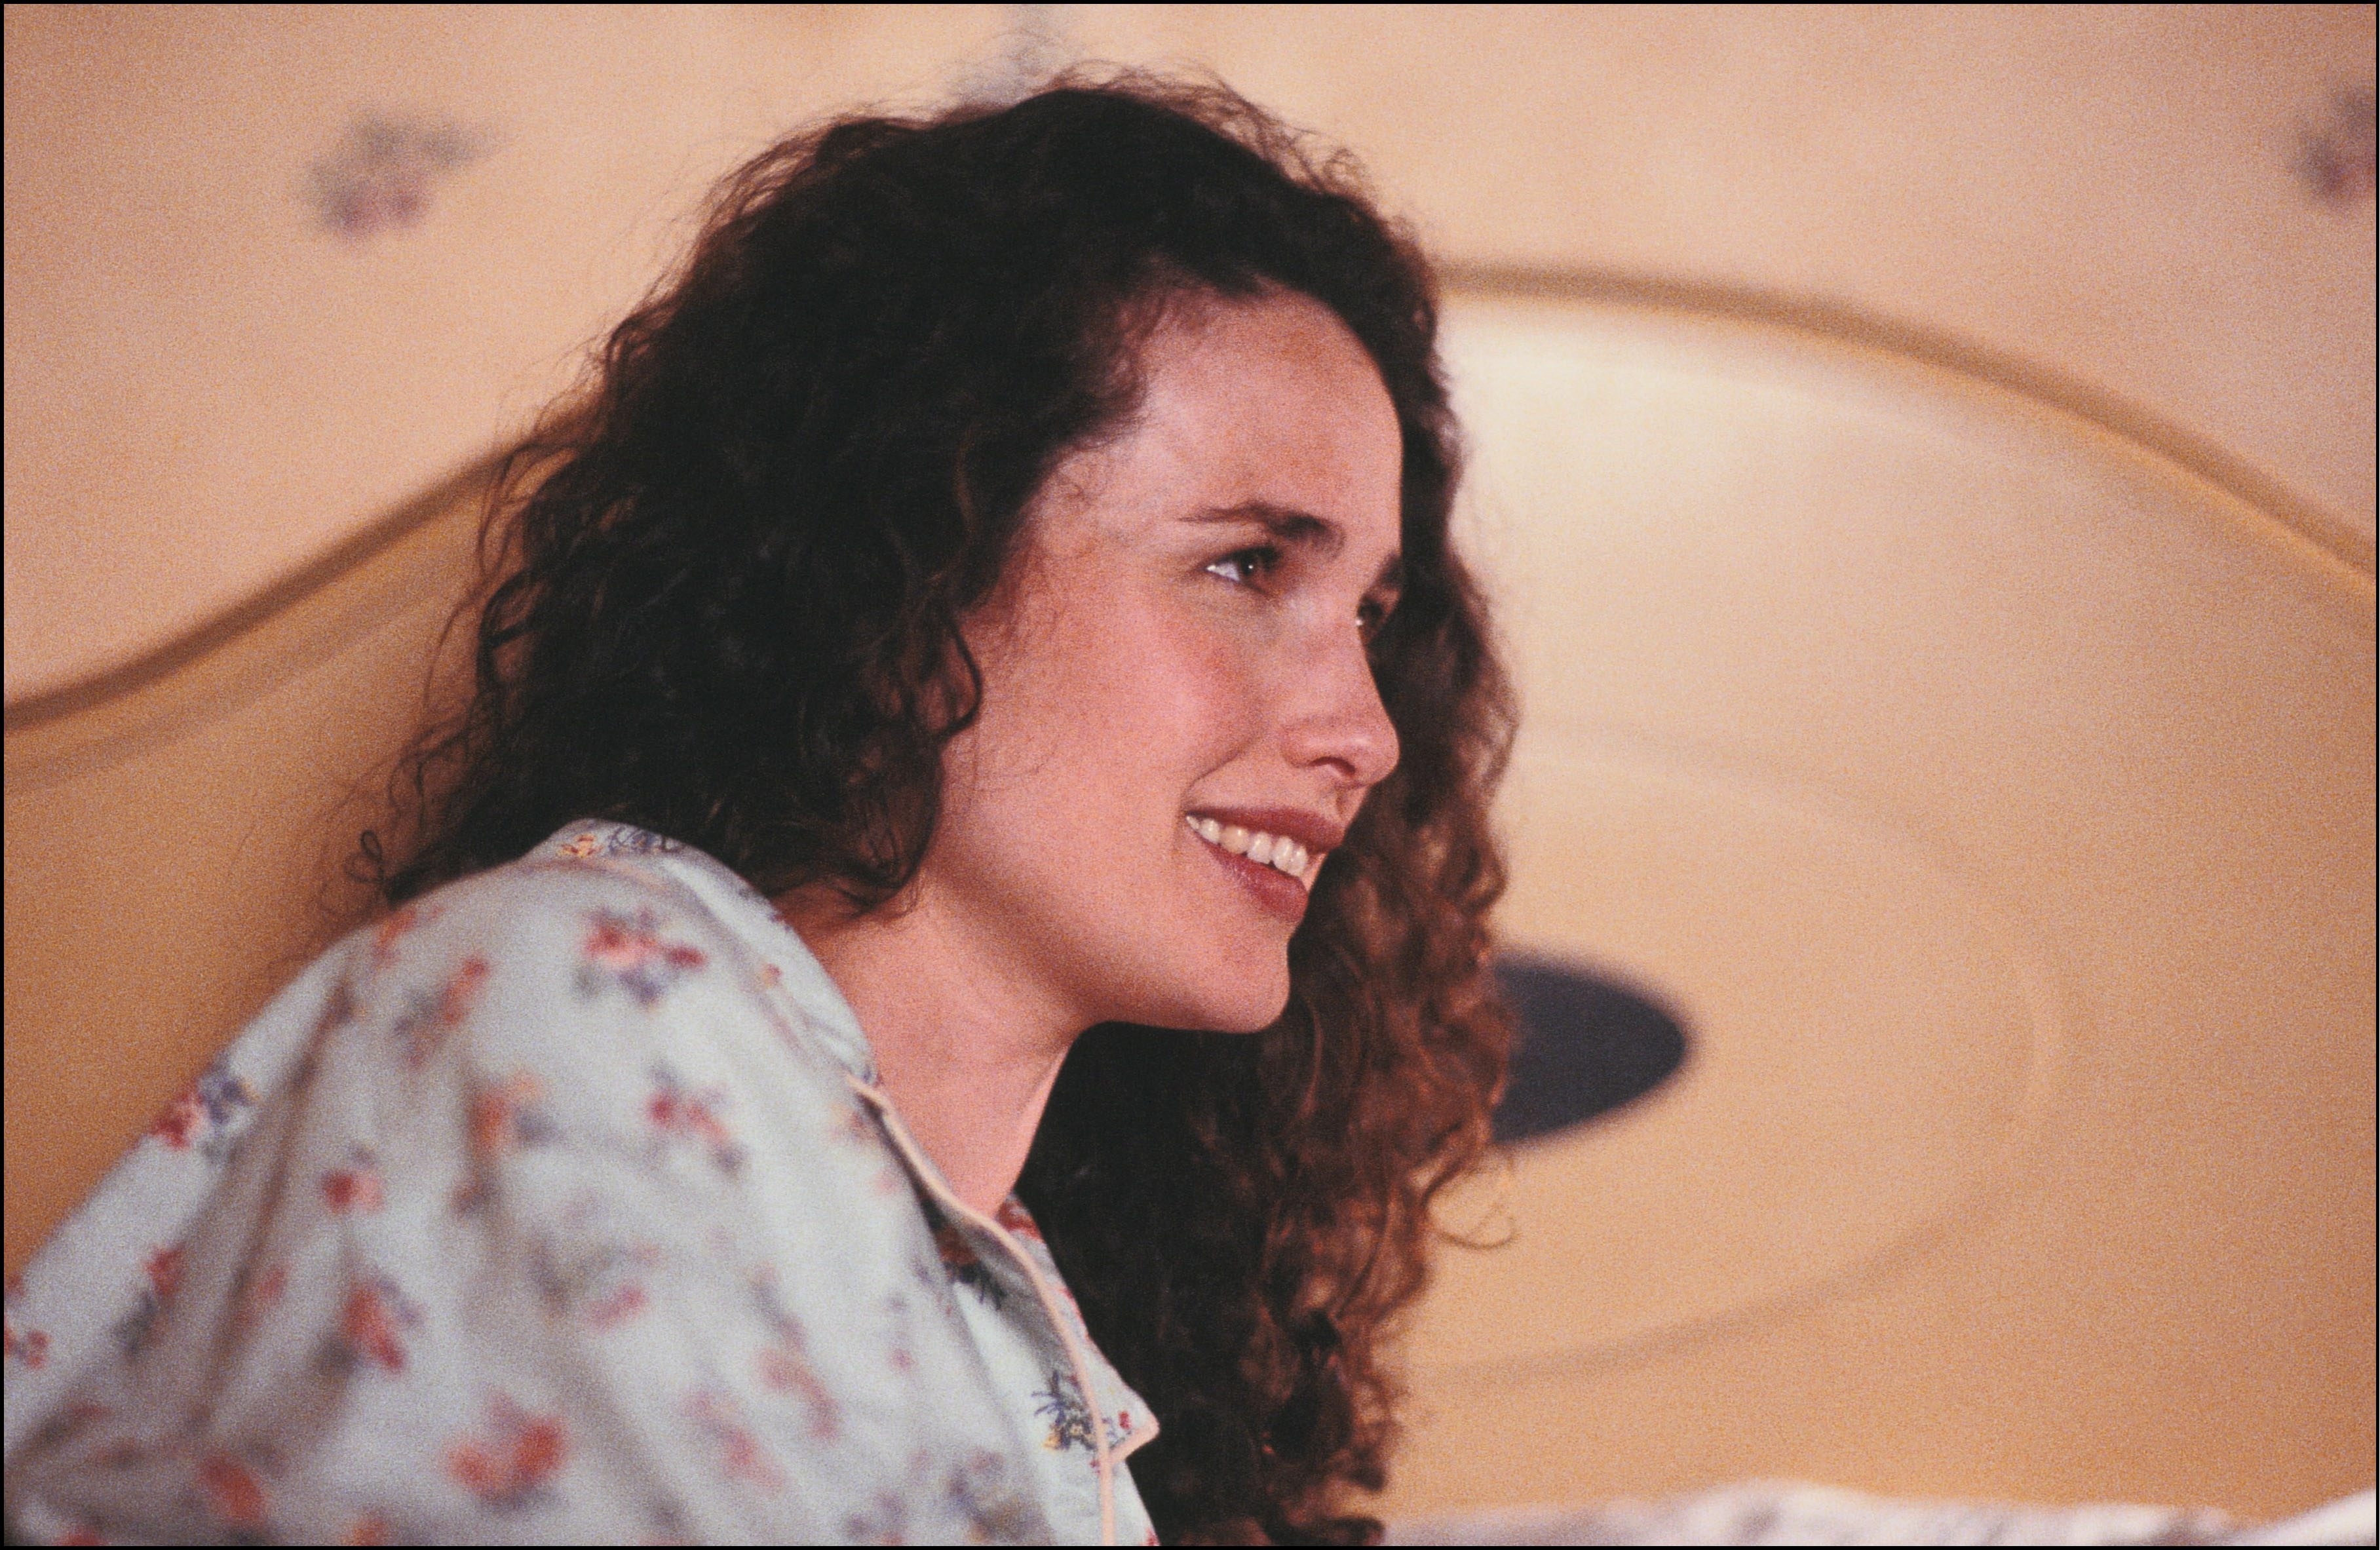 Andie McDowell dans le film "Green Card" en avril 1990 | Source : Getty Images